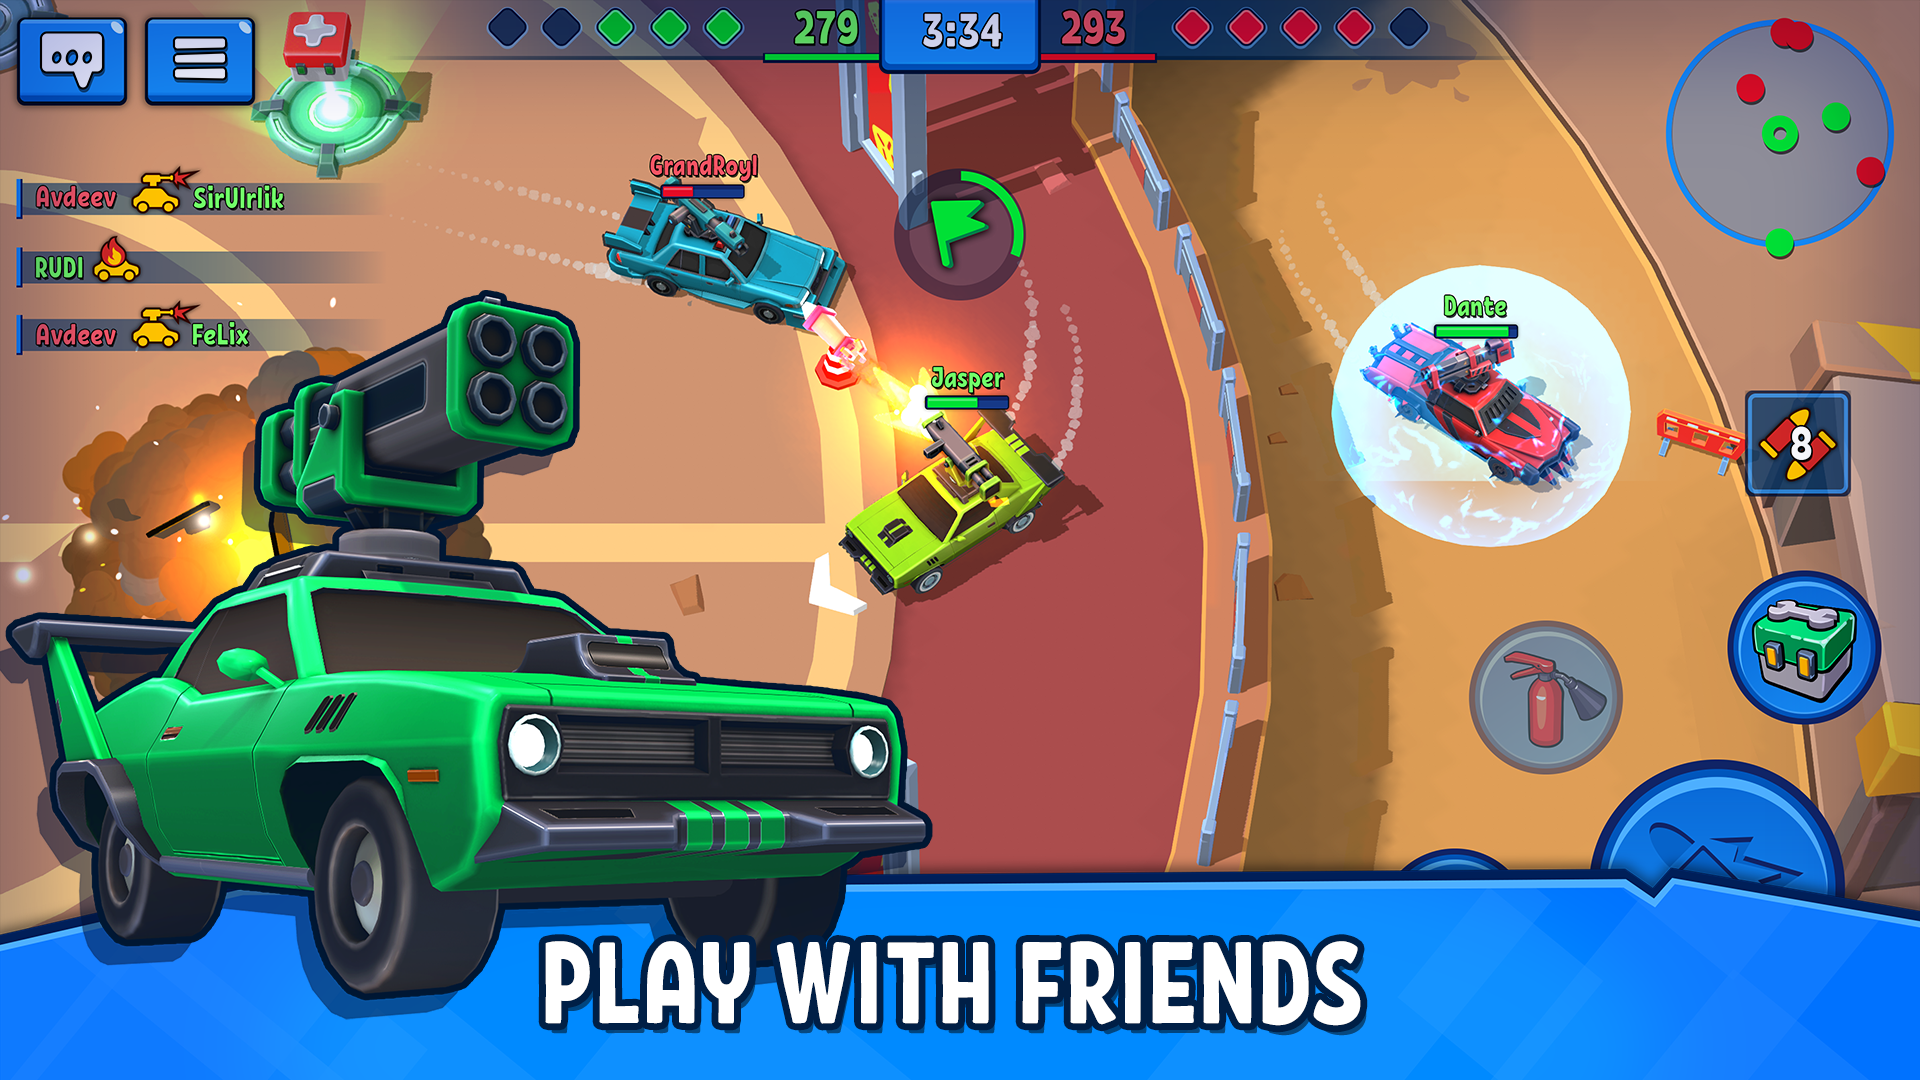 Screenshot 1 of Car Force: PvP-Shooter-Spiele 4.67